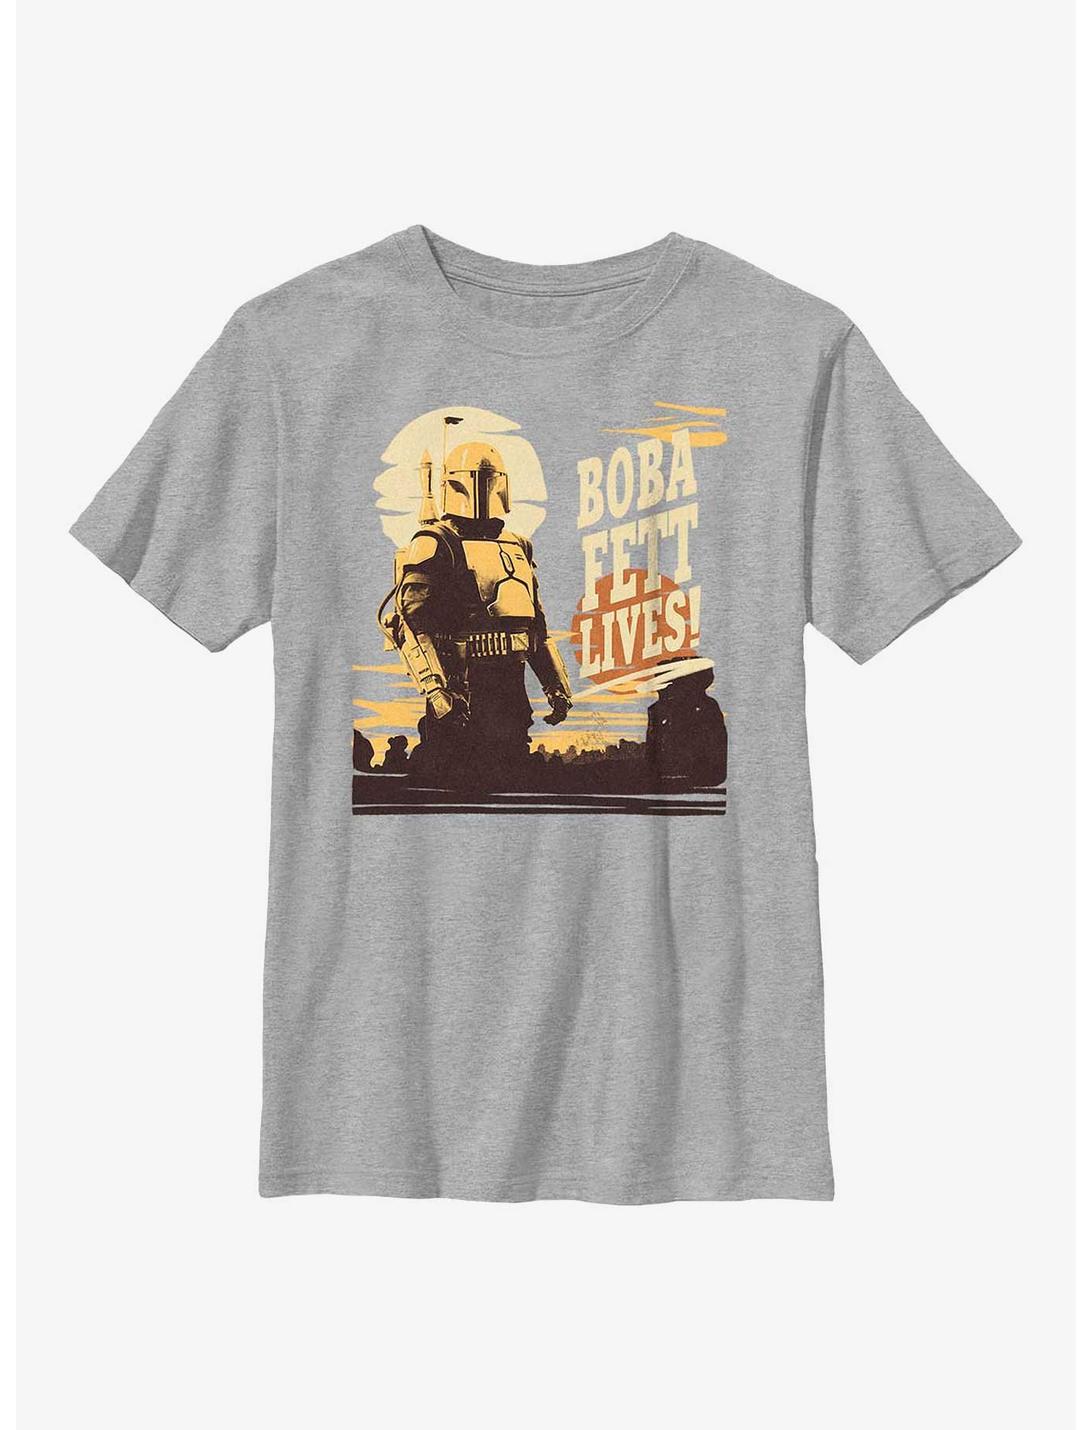 Star Wars: The Book Of Boba Fett Boba Fett Lives! Youth T-Shirt, ATH HTR, hi-res